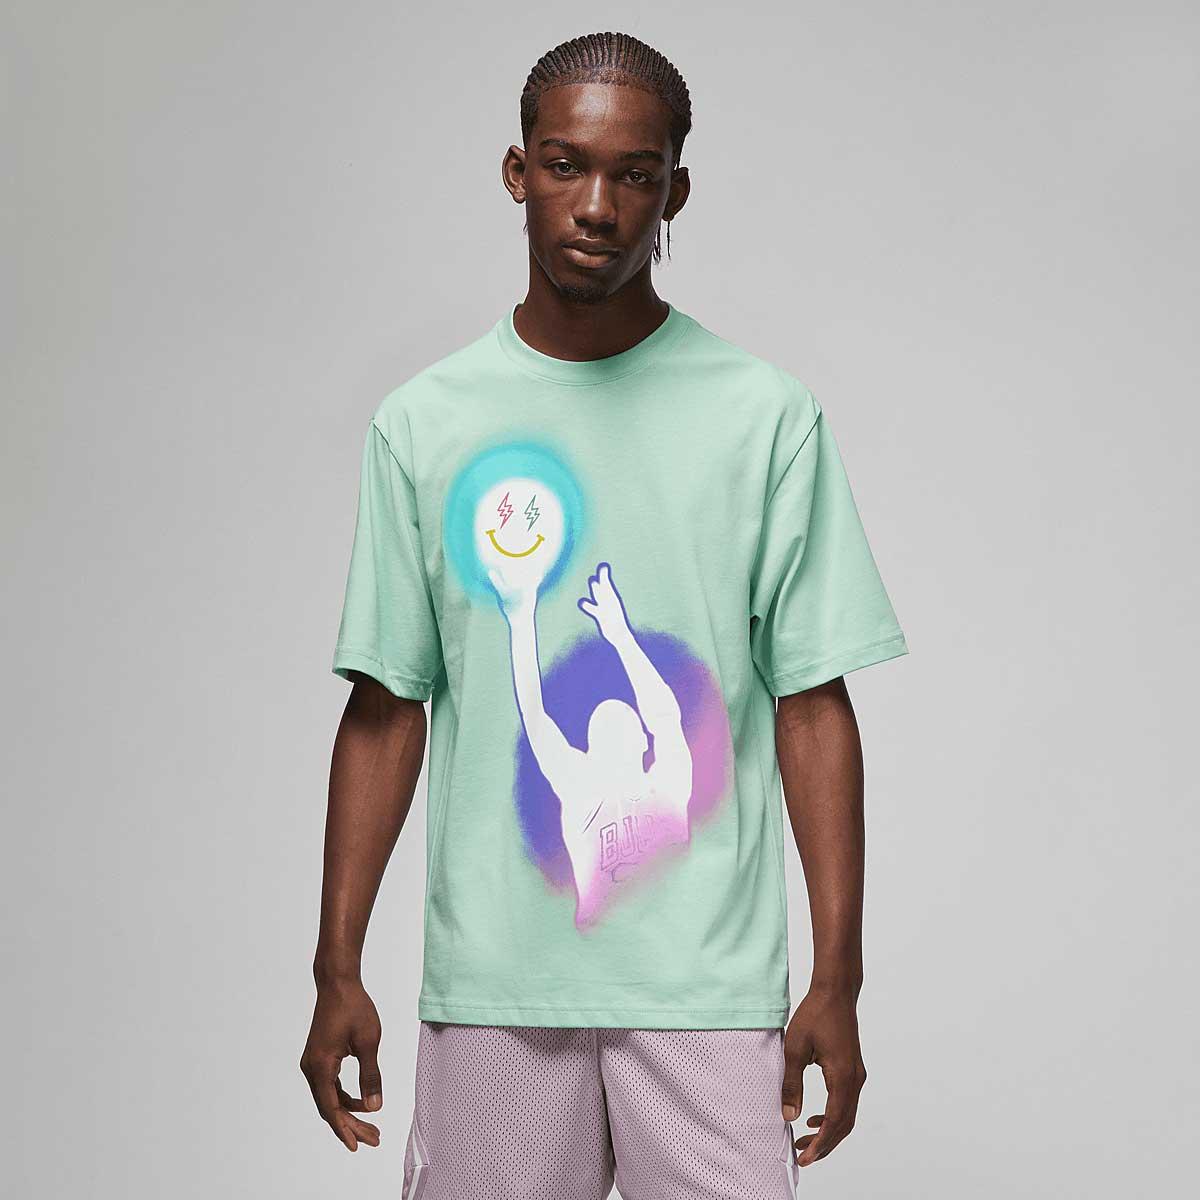 africano Dibujar plan de ventas Compre Jordan T-Shirt x J Balvin por EUR 49.95 en KICKZ.com!